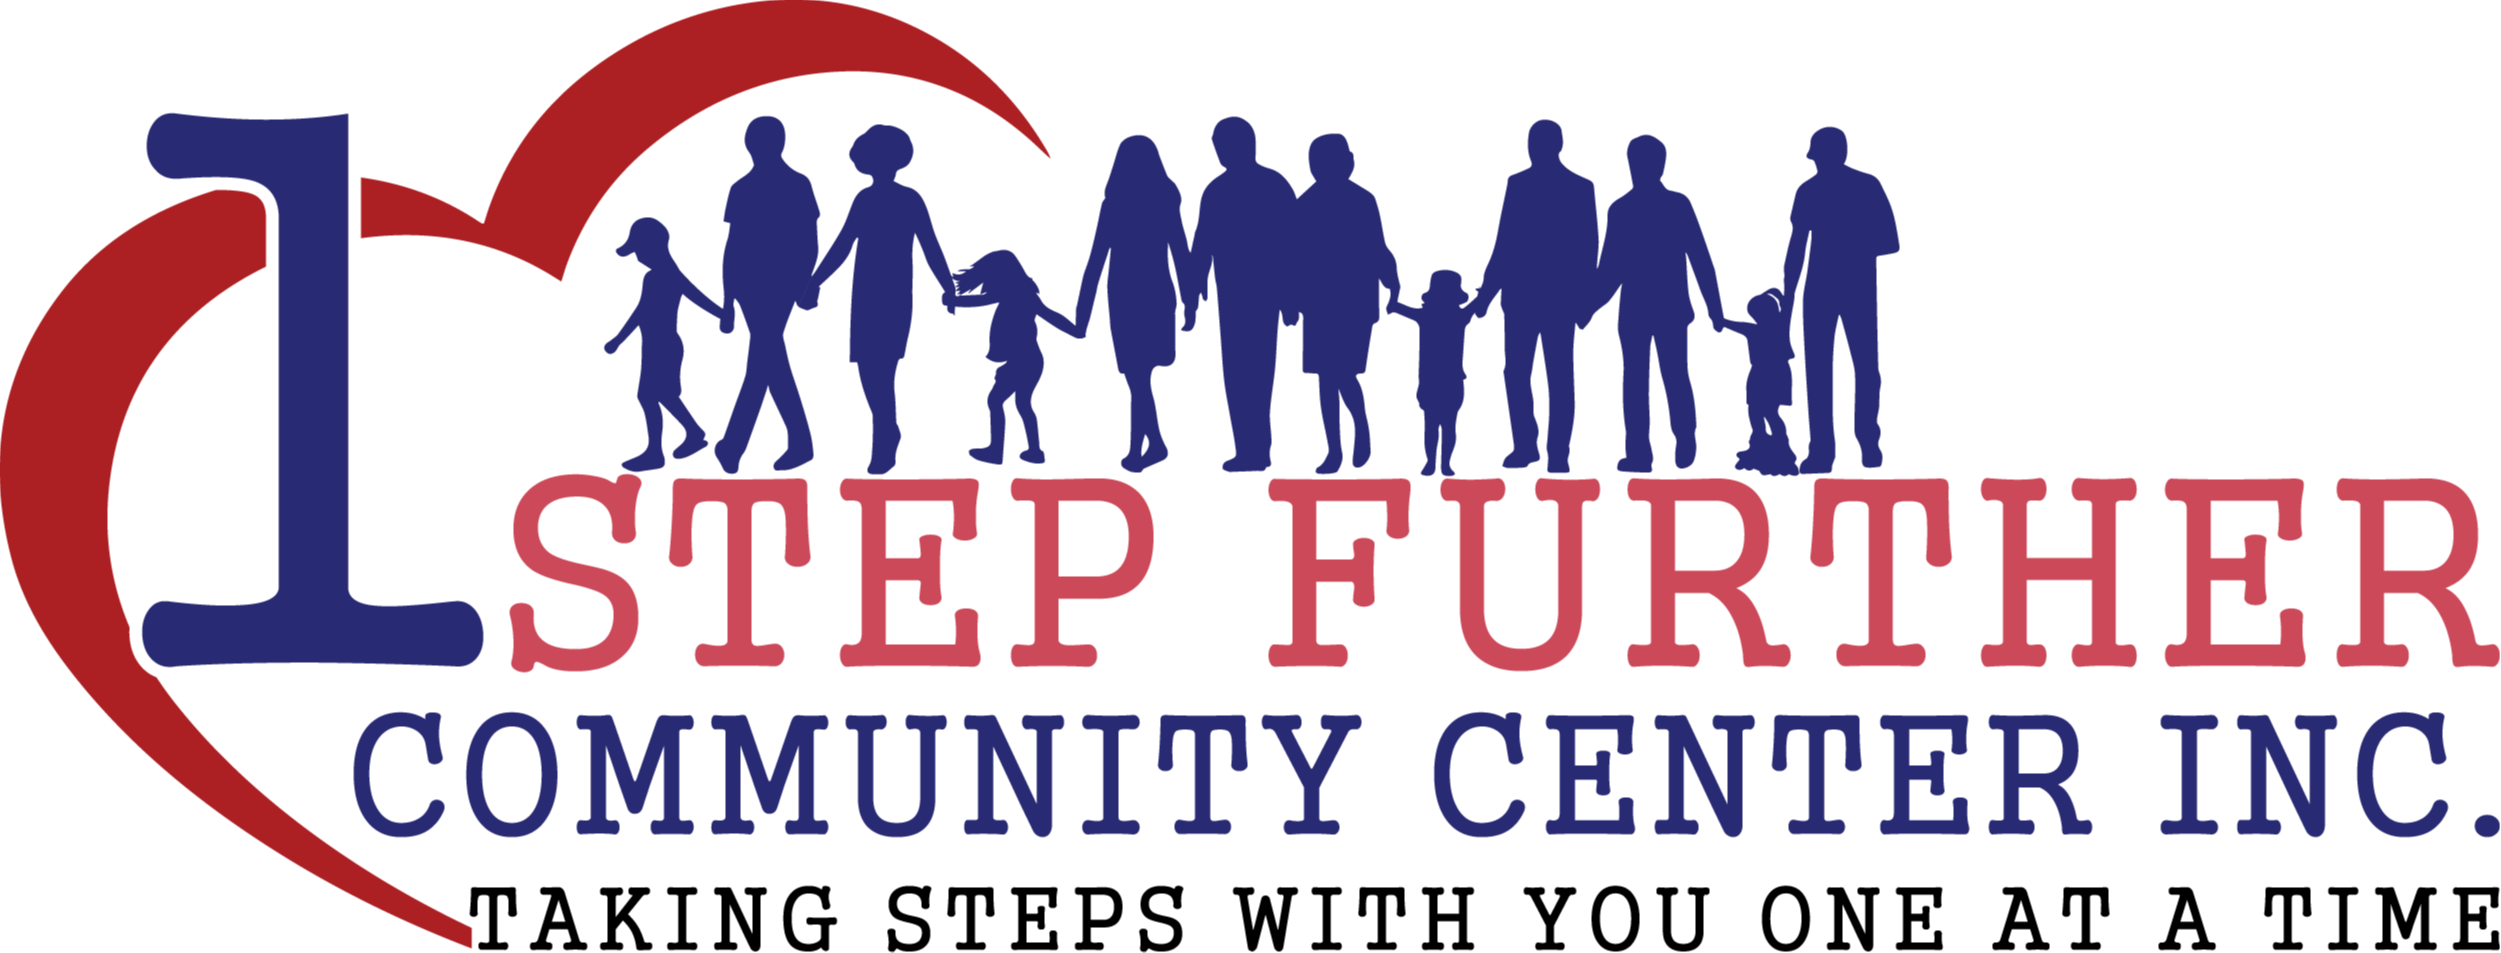 1 Step Further Community Center, Inc. logo